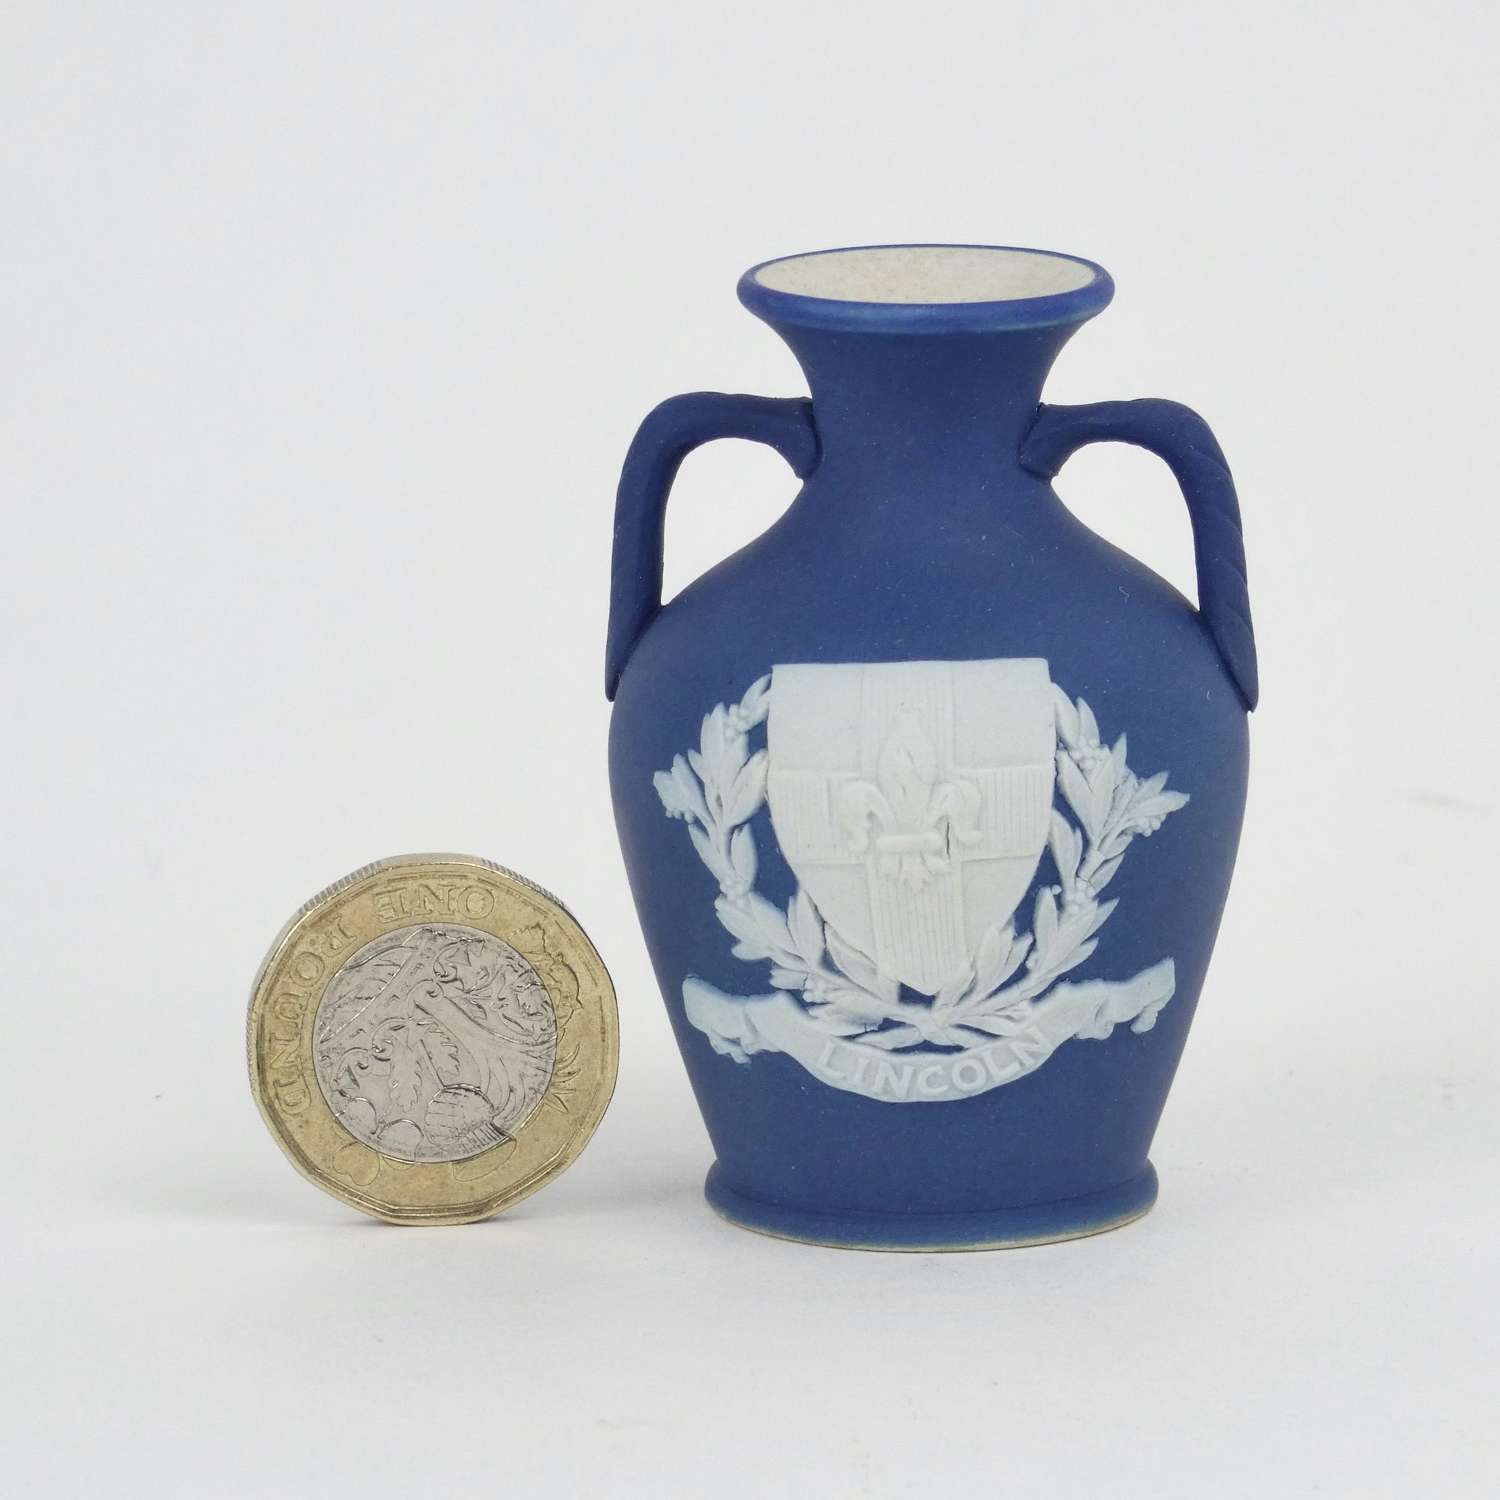 Miniature, Portland shaped vase